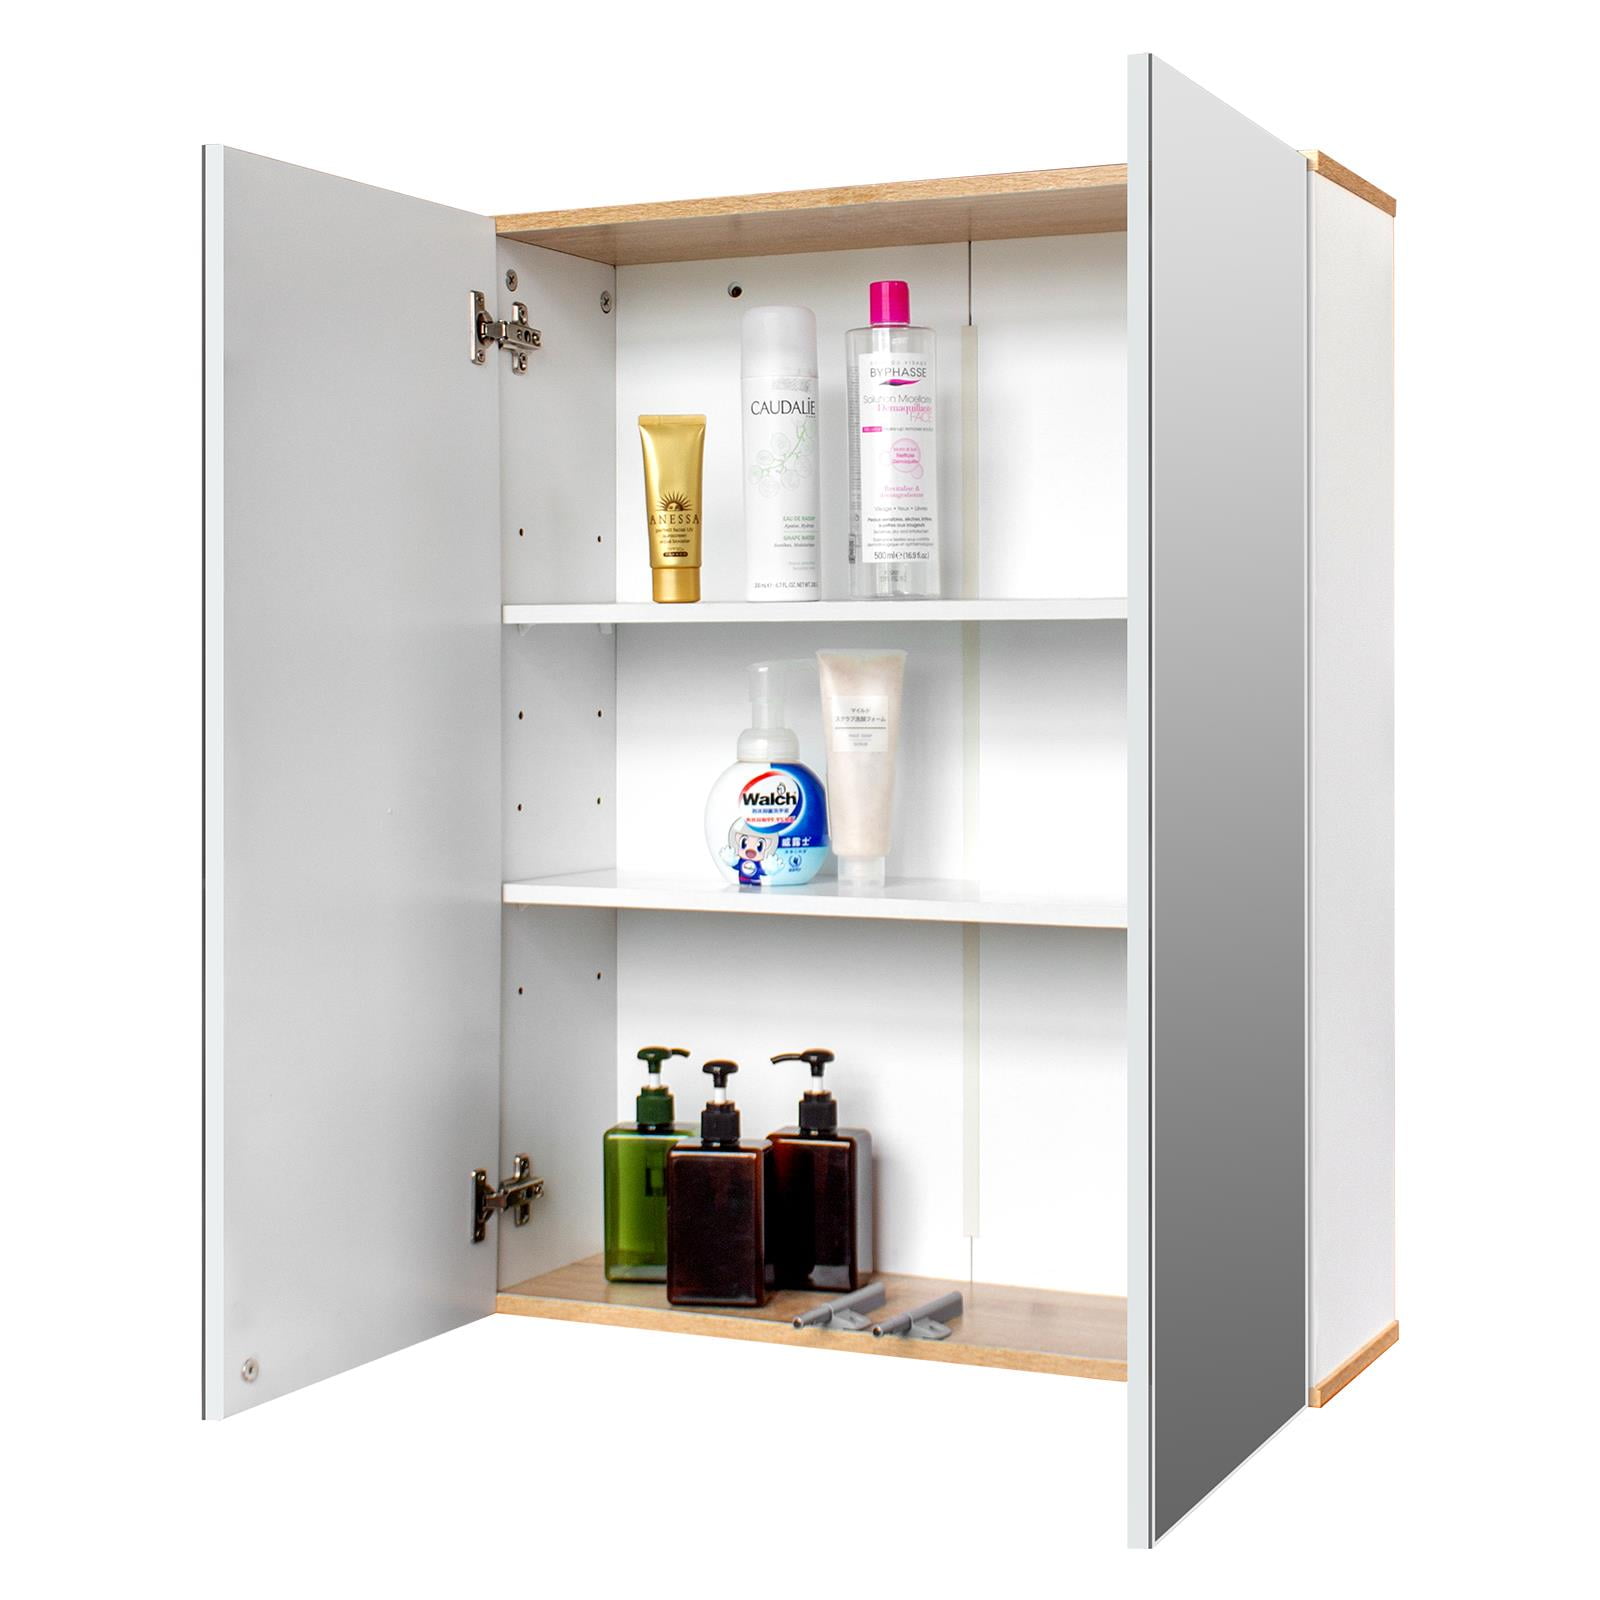 VIAGDO Wall Cabinet Bathroom Storage Cabinet Wall Mounted with Adjustable  Shelves Inside, Double Door Medicine Cabinet, Utility Cabinet Organizer  Over